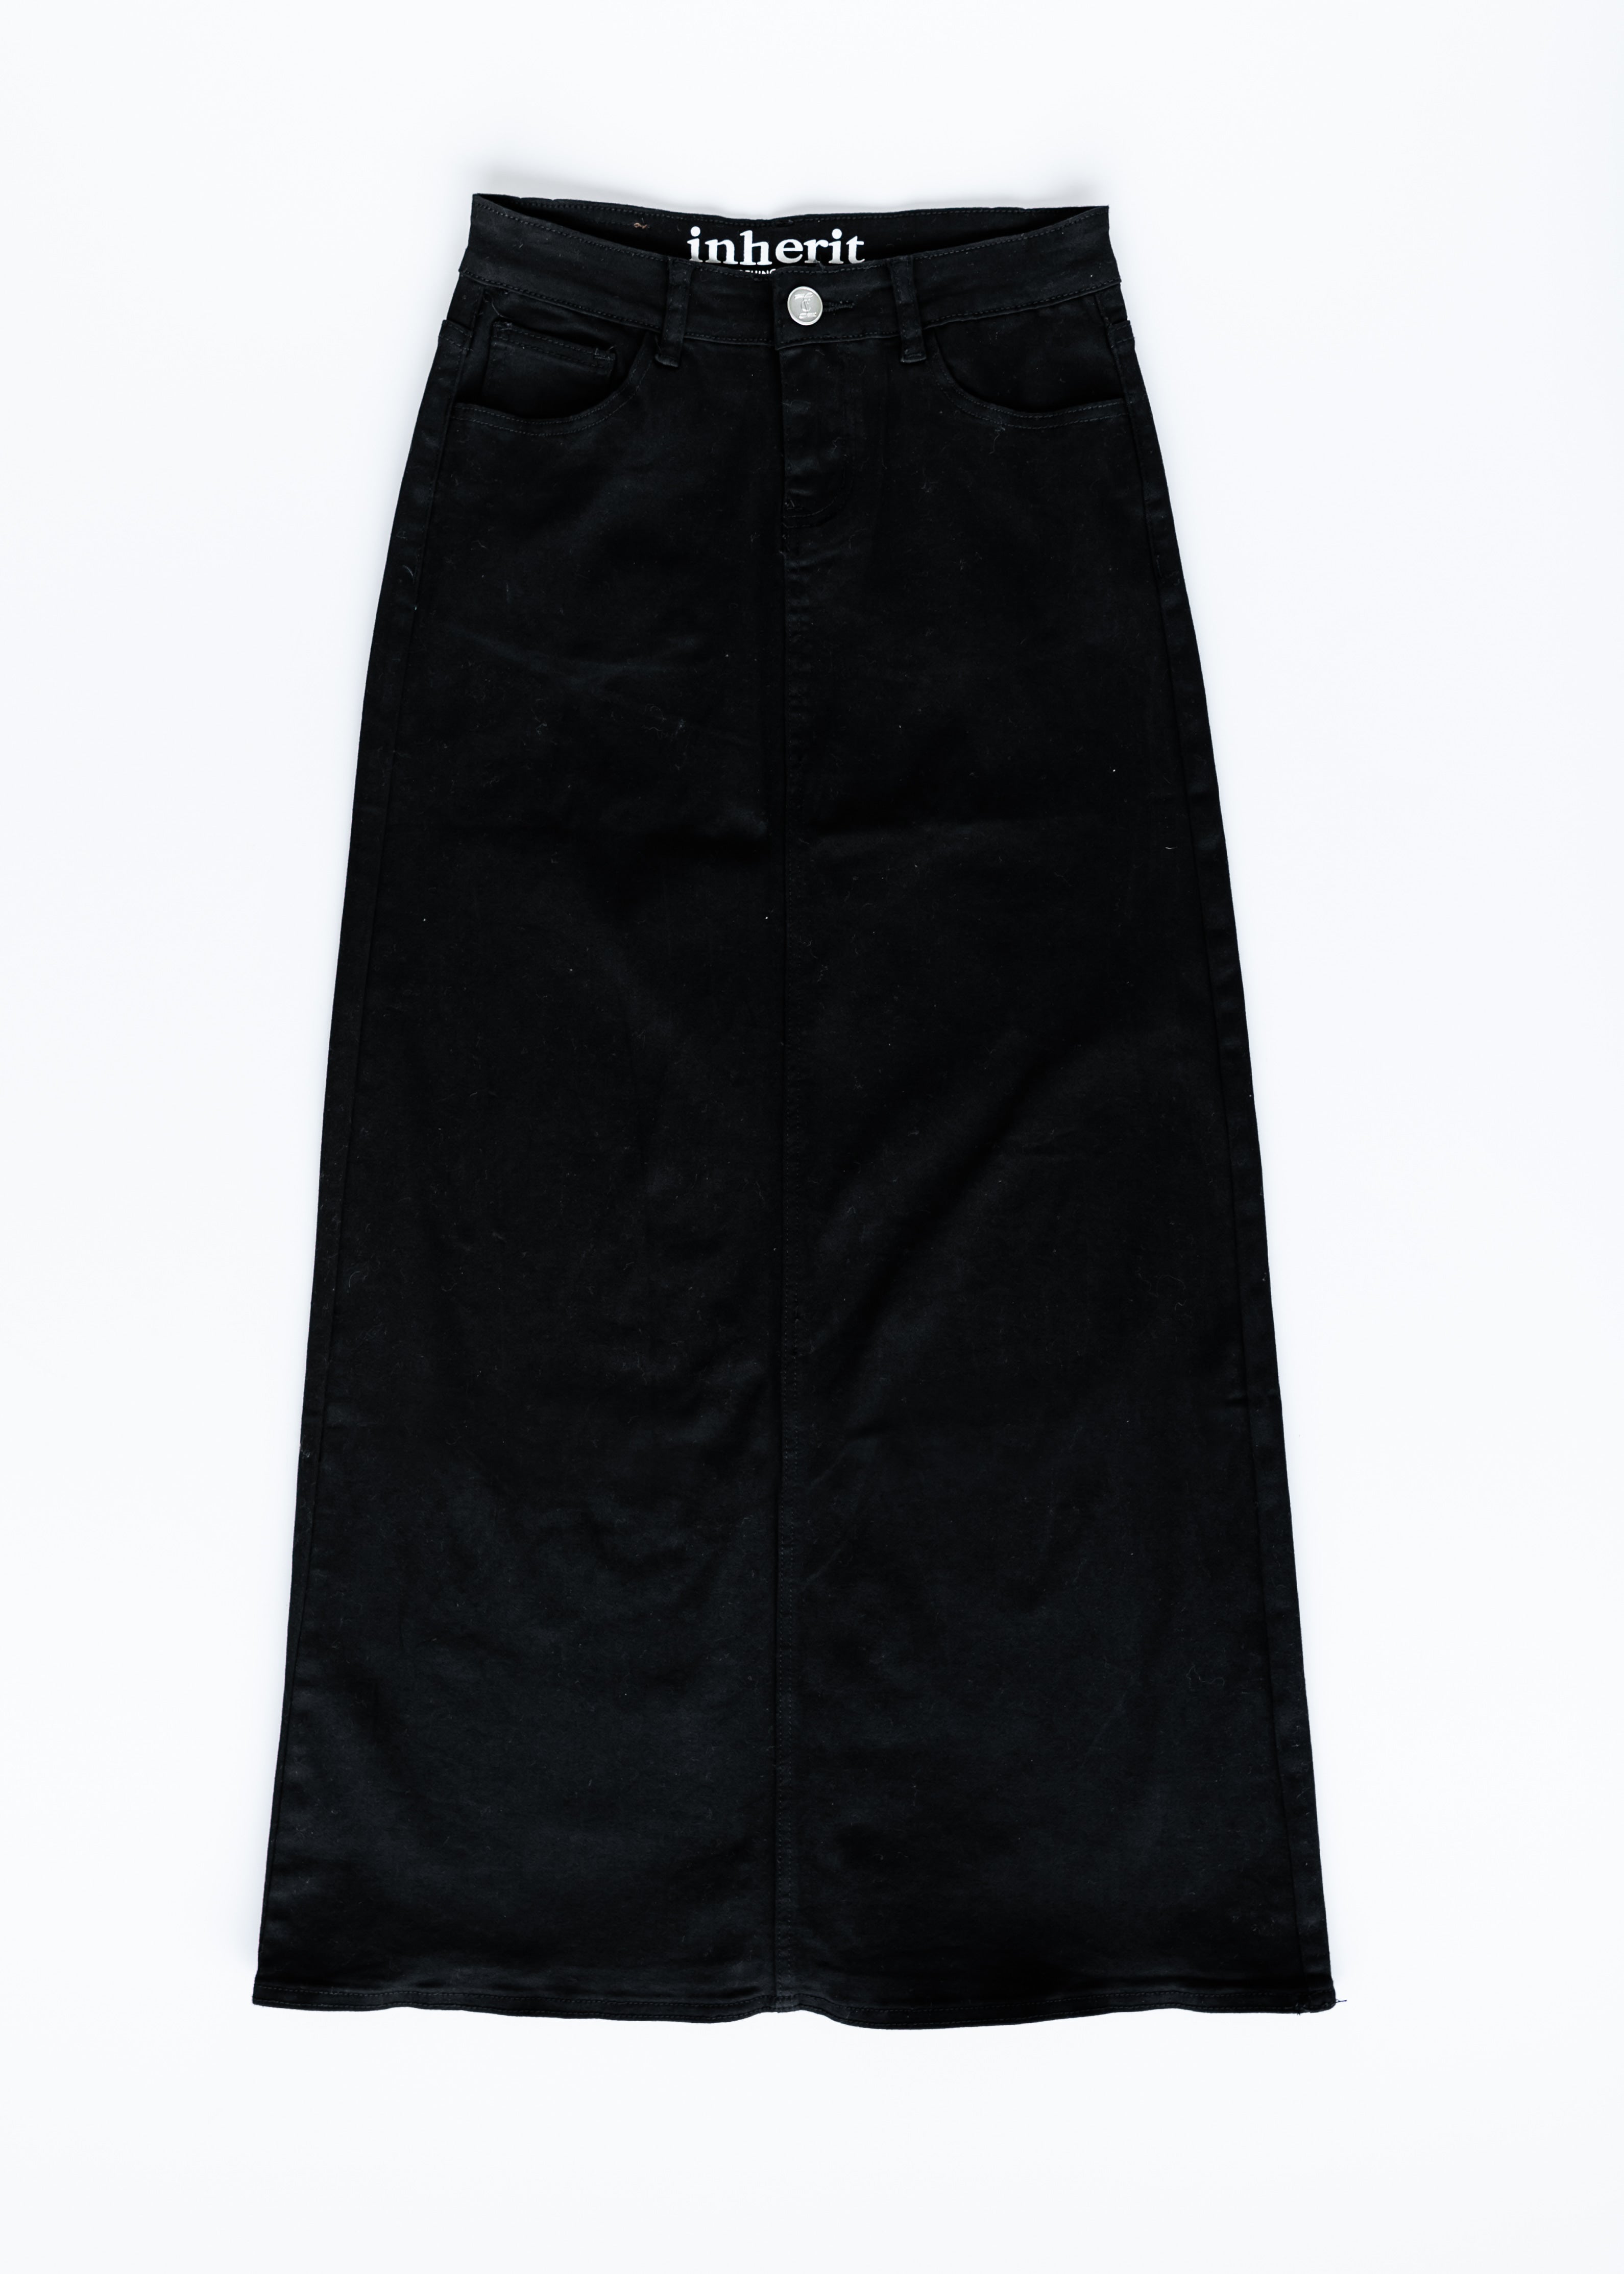 Buy UTNISAN Jean Skirt Women's High Waist Slim Fit Stretchy Bodycon Mini Denim  Skirts 012 (XL, Black Washed) at Amazon.in